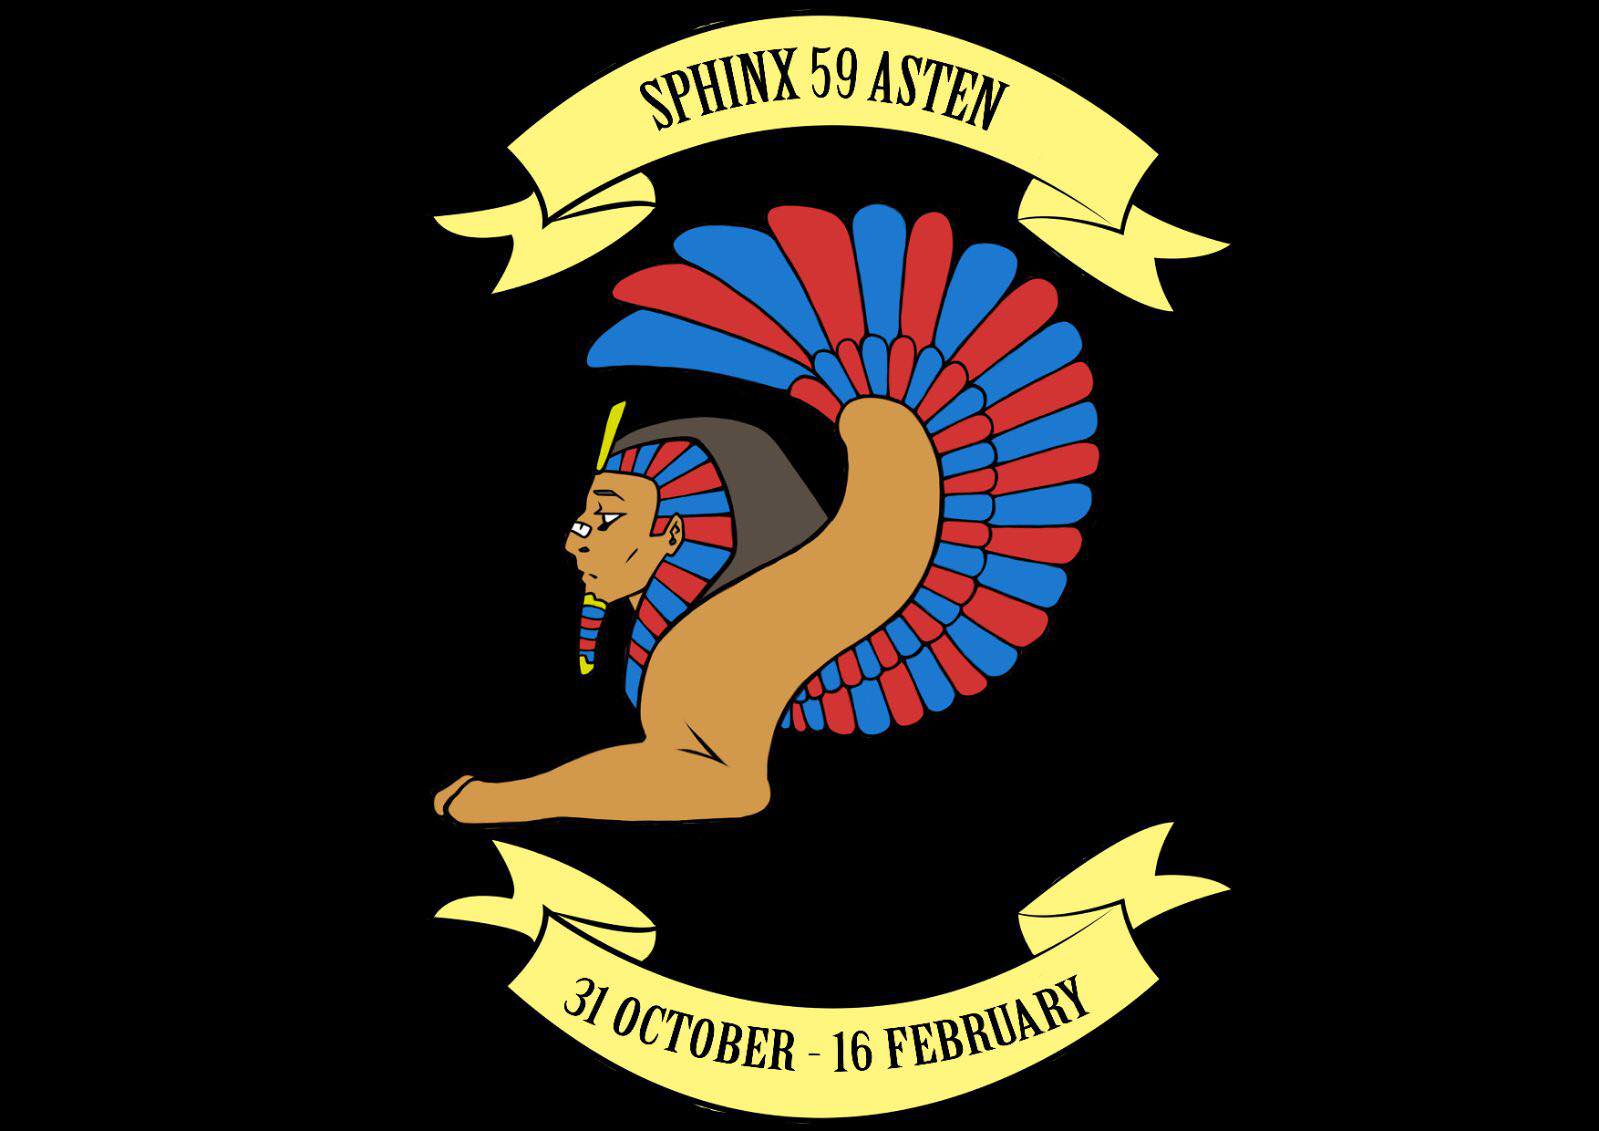 Sphinx Logo - 59 Asten Battery Sphinx Logo - Album on Imgur